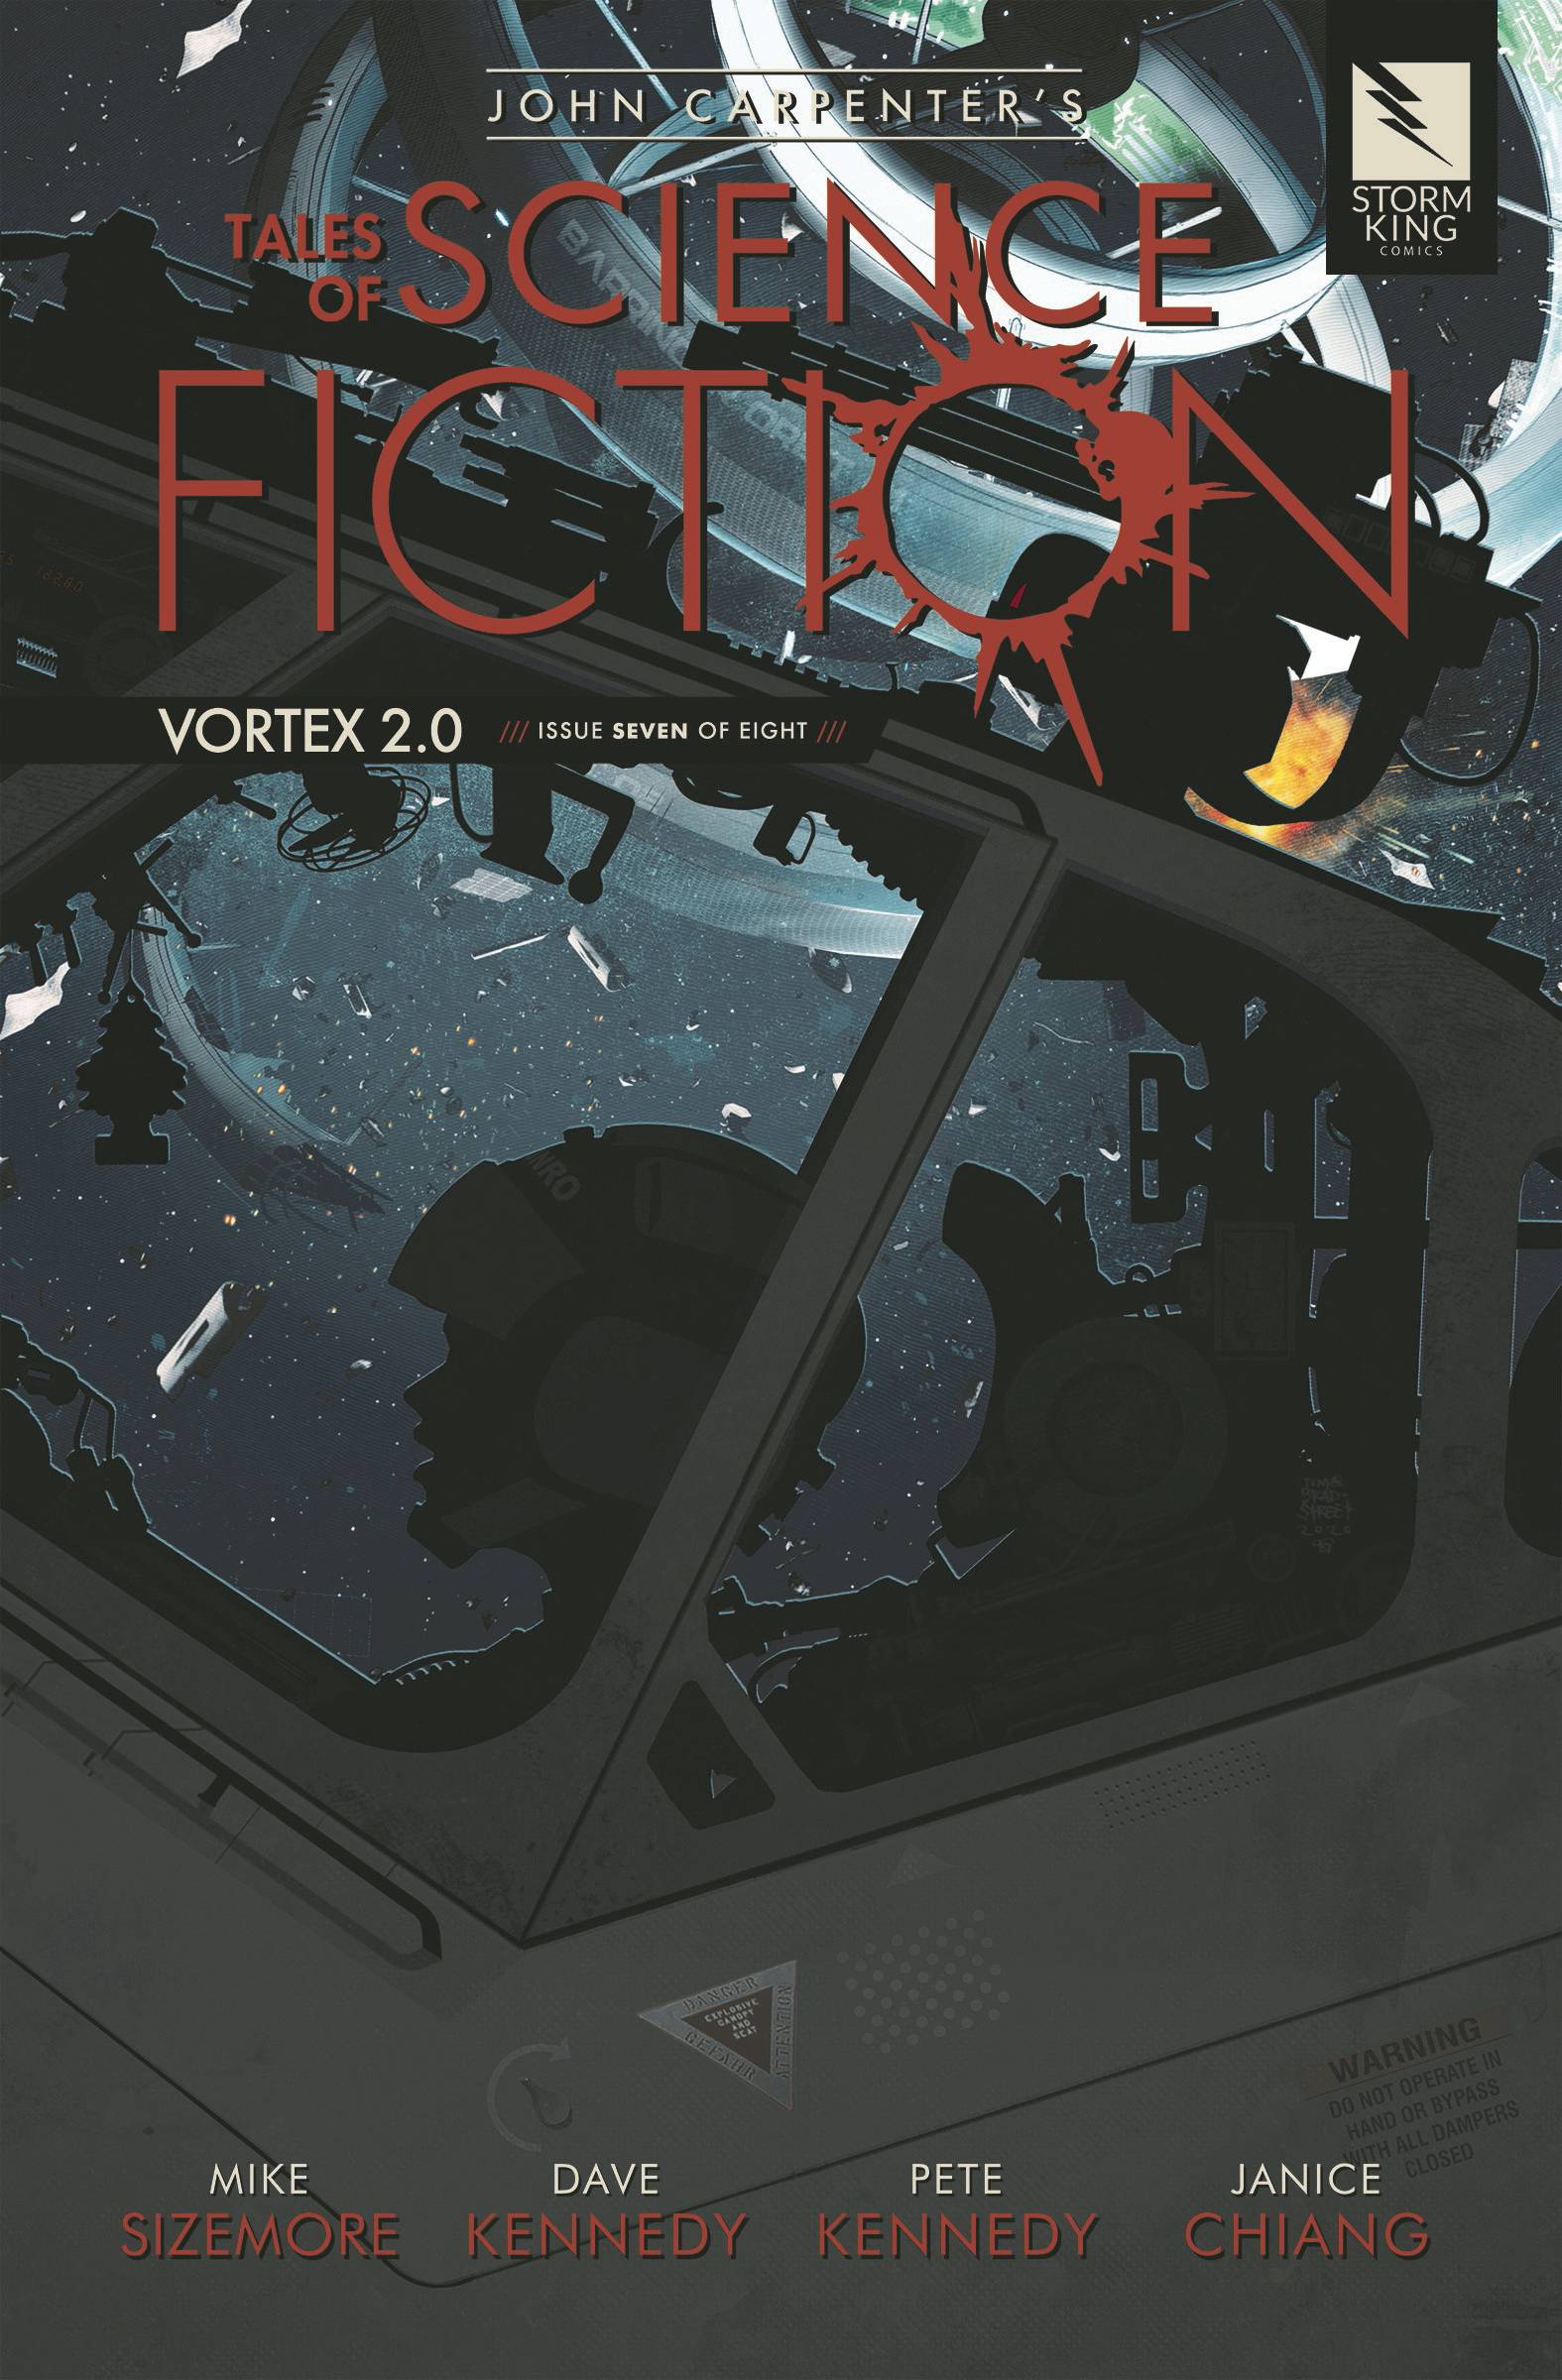 John Carpenter's Tales of Science Fiction: Vortex 2 #7 (2020)